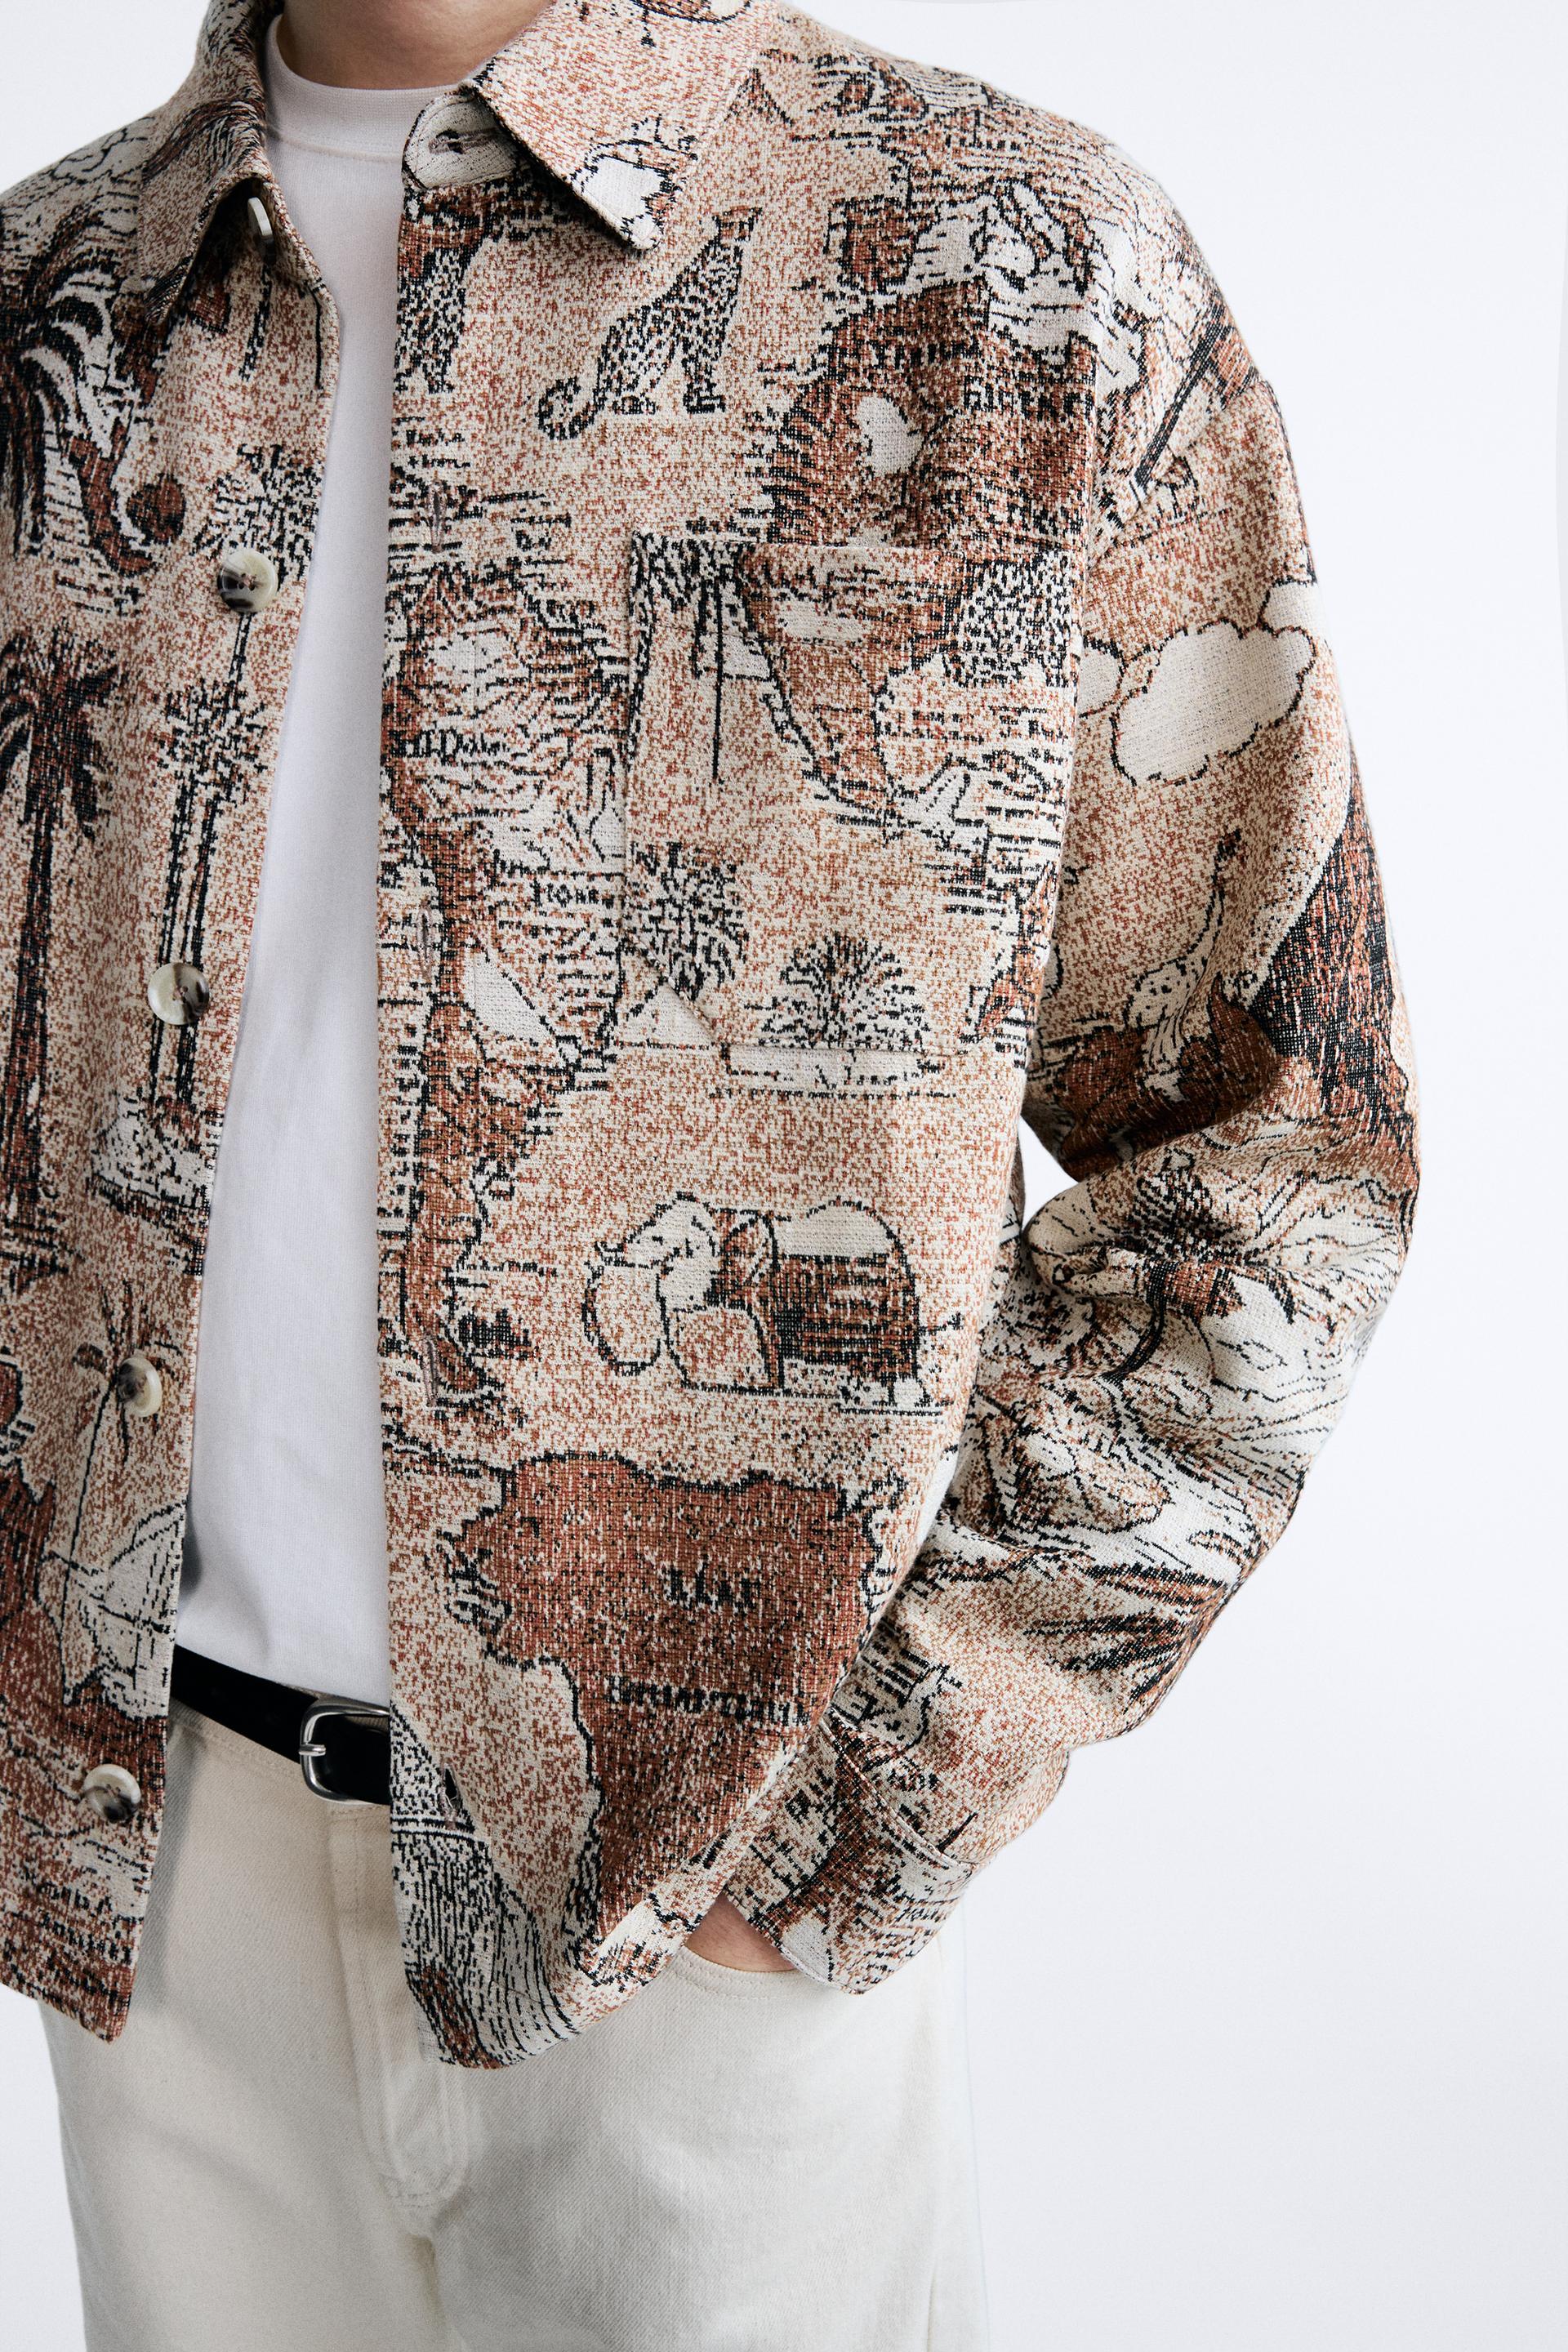 Zara Geometric Jacquard Denim Jacket - M, L 🔖: N120,000 📍HOW TO